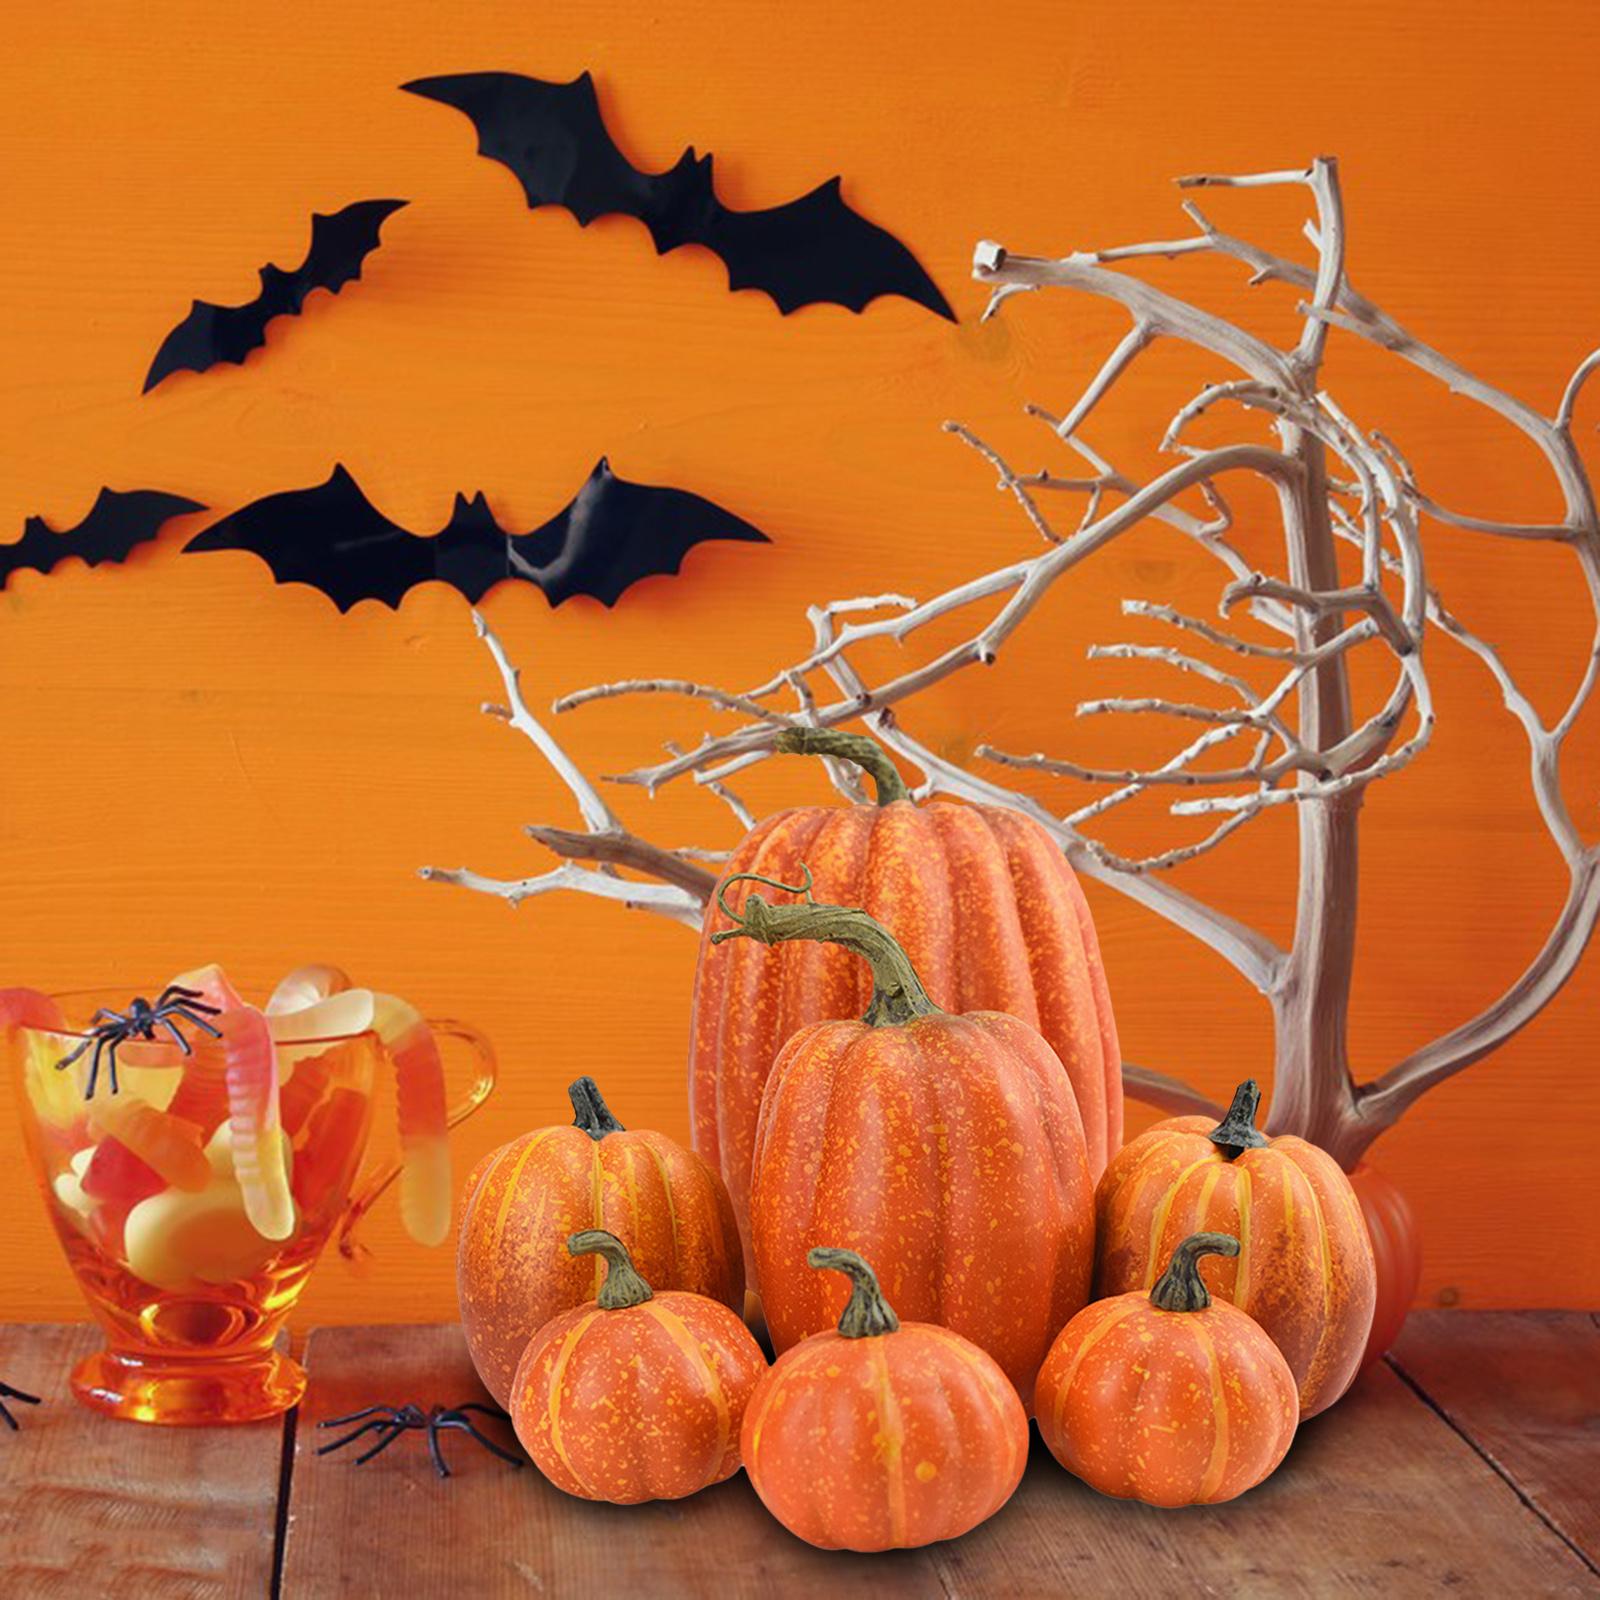 7x Artificial Pumpkins Bulk Faux Harvest For Fall Wedding Centerpiece Orange